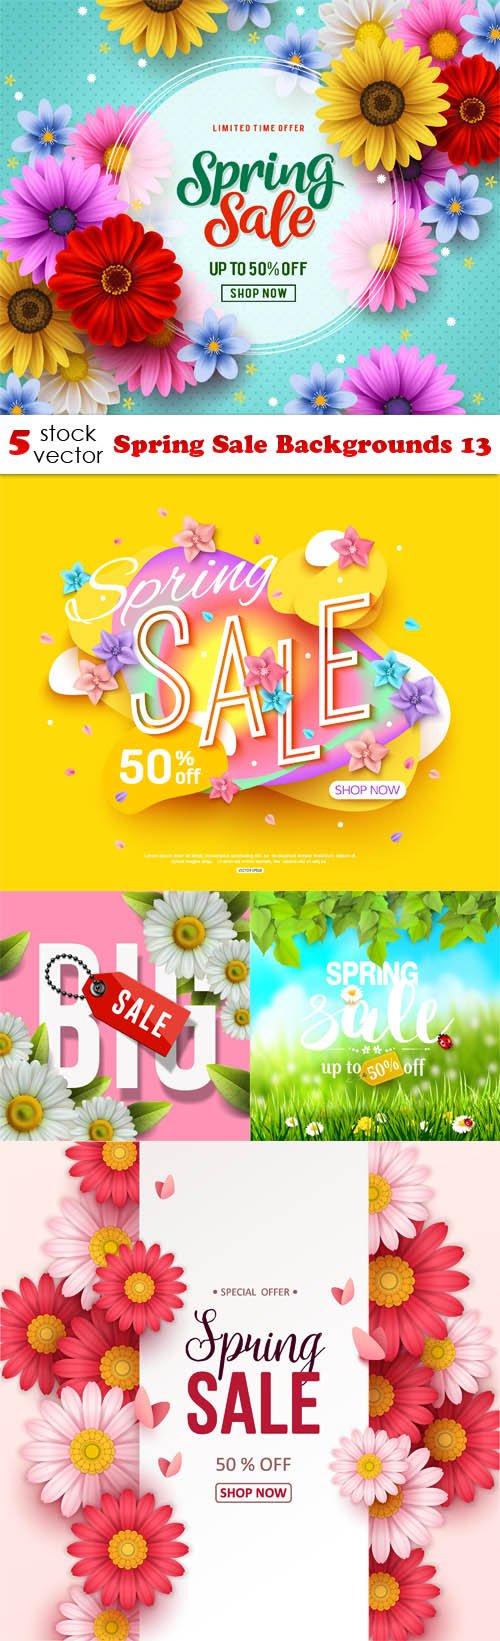 Vectors - Spring Sale Backgrounds 13